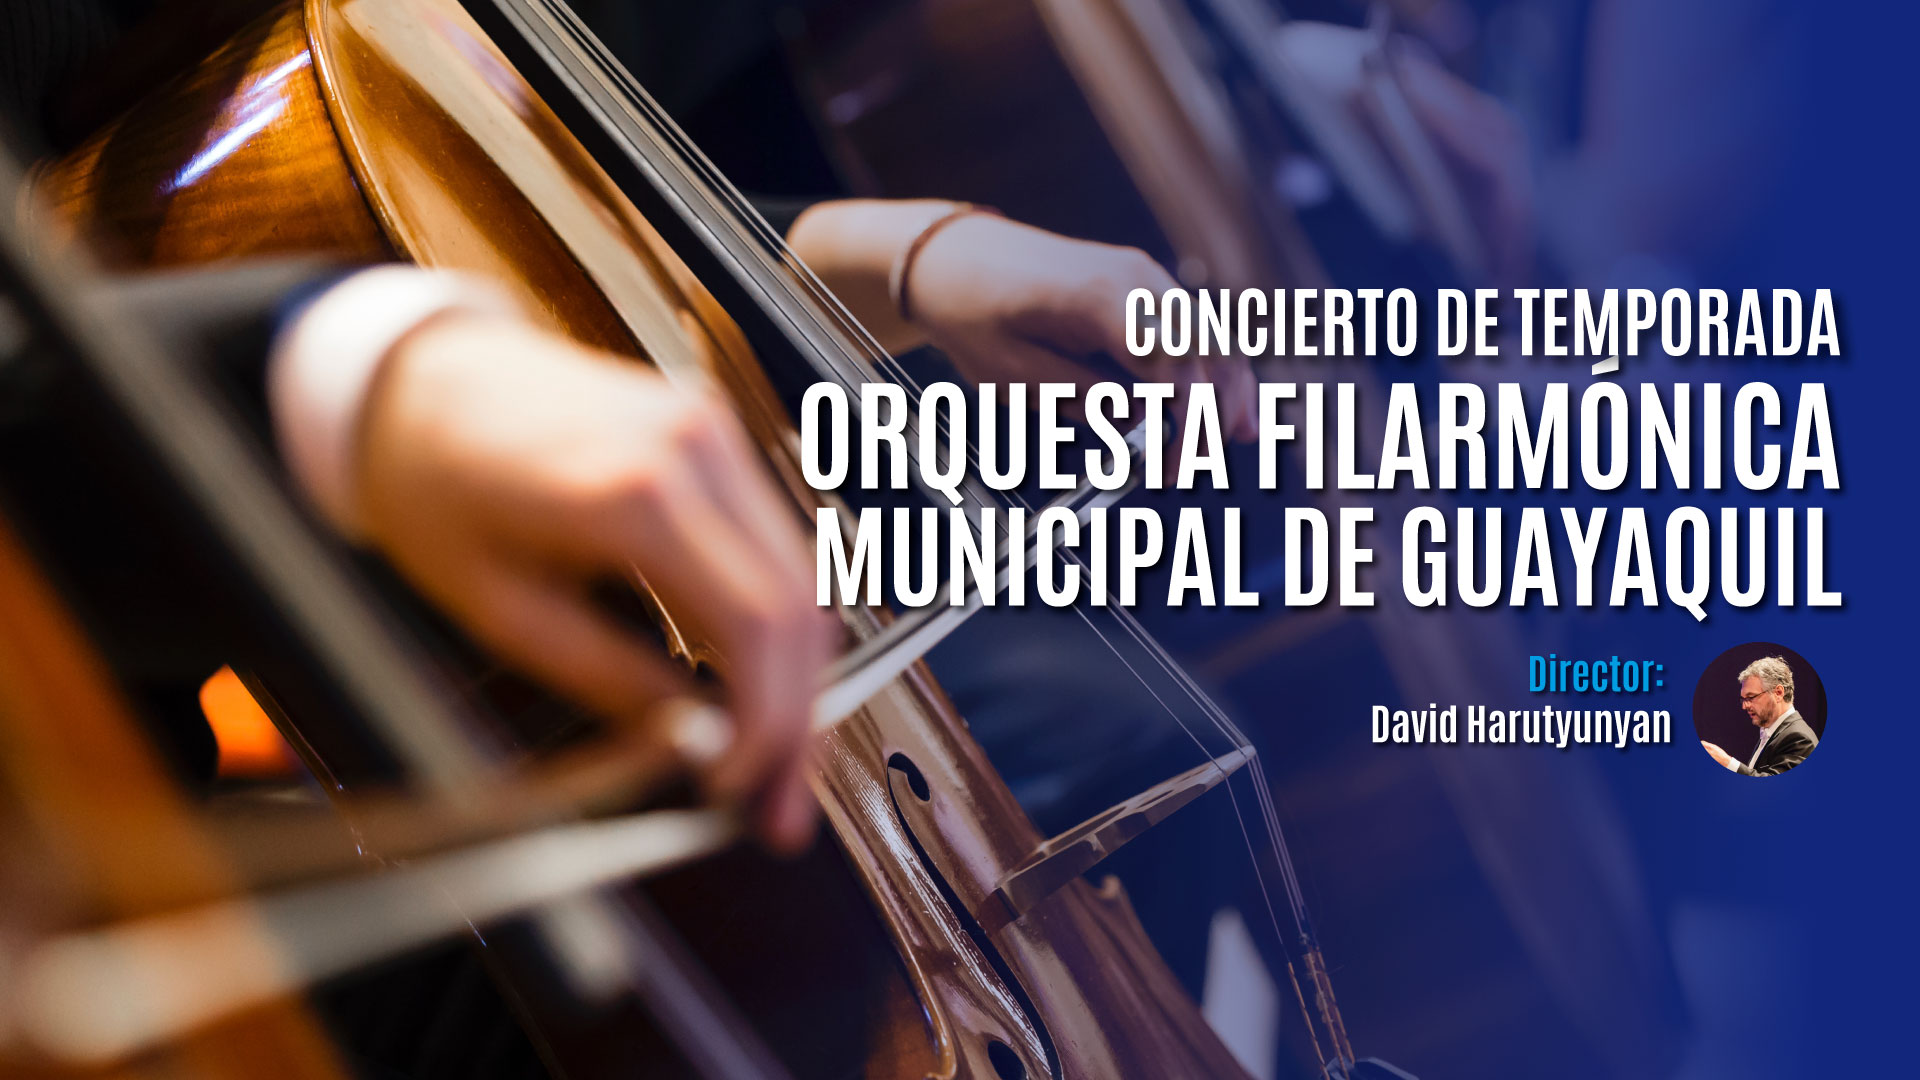 concierto-temporada-orquesta-filarmonica-municipal-guayaquil